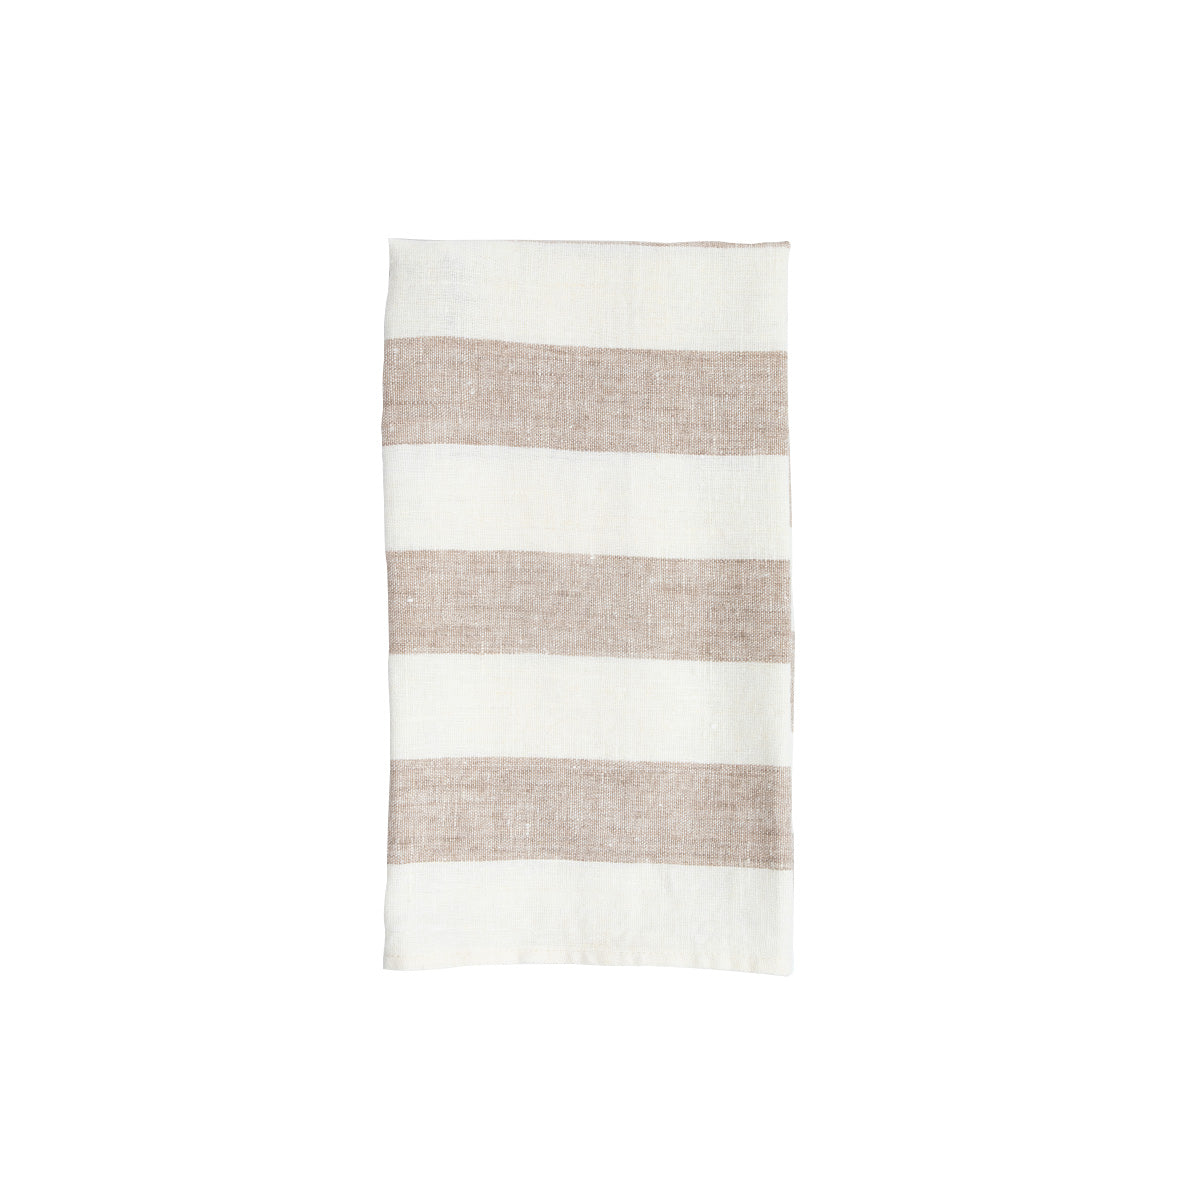 MH Tea Towel - Beige Country Stripe